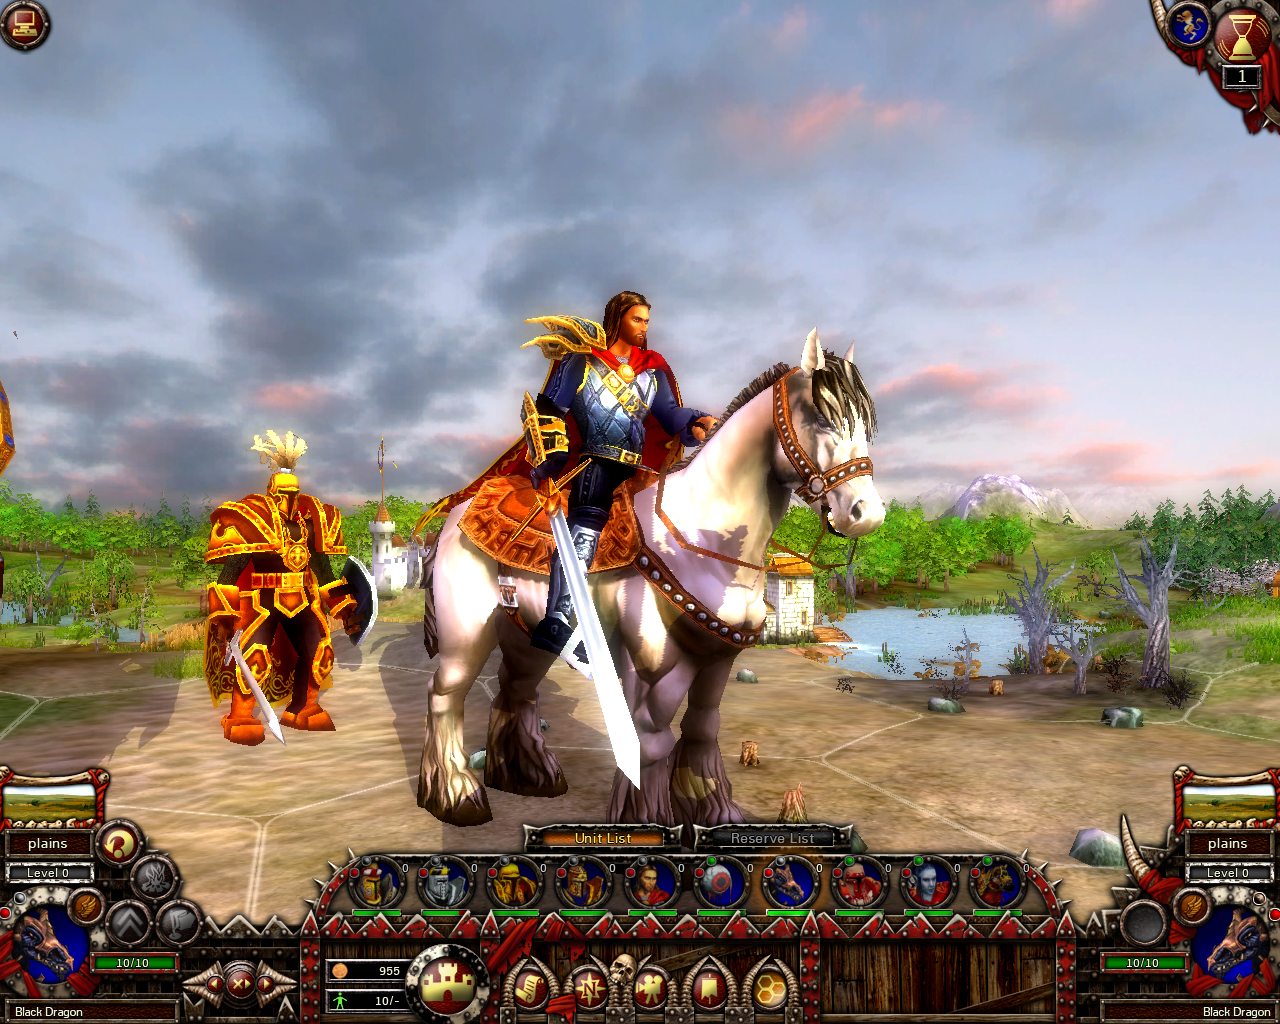 Fantasy Wars screenshot